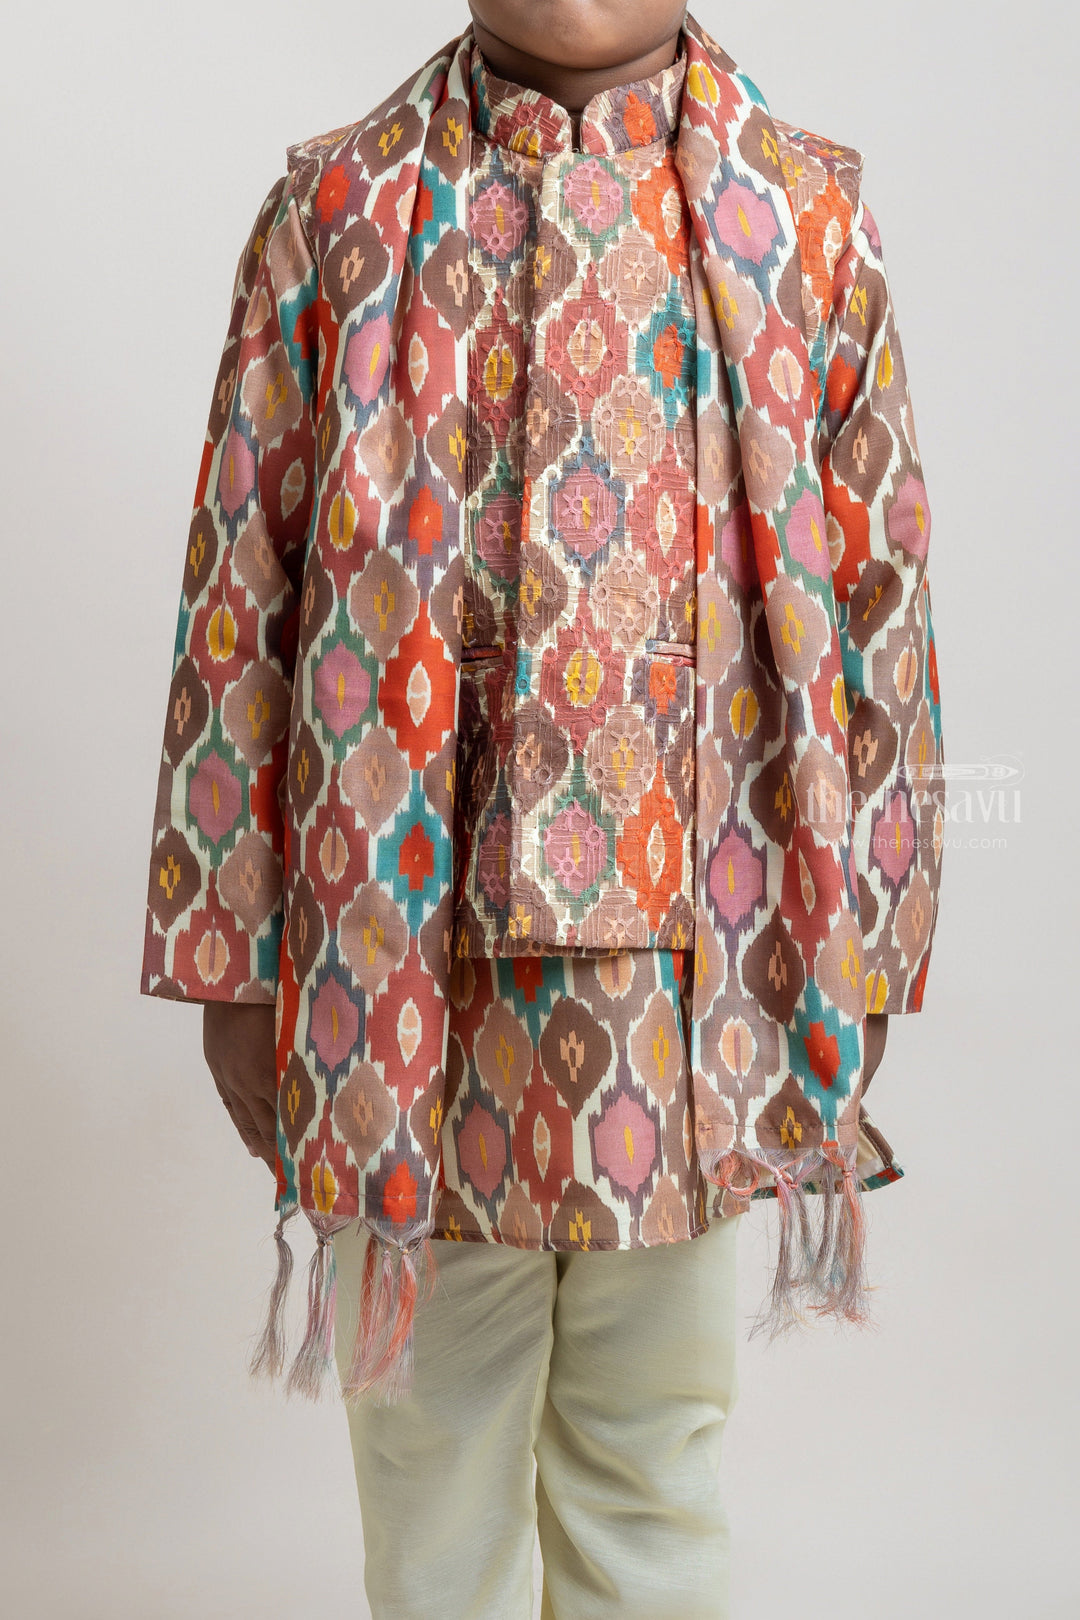 The Nesavu Boys Jacket Sets Classic Multicolor Printed Kurta Set With Overjacket For Boys Nesavu Shop the Best Ethnic Wear for Boys Online | New Boys Collection